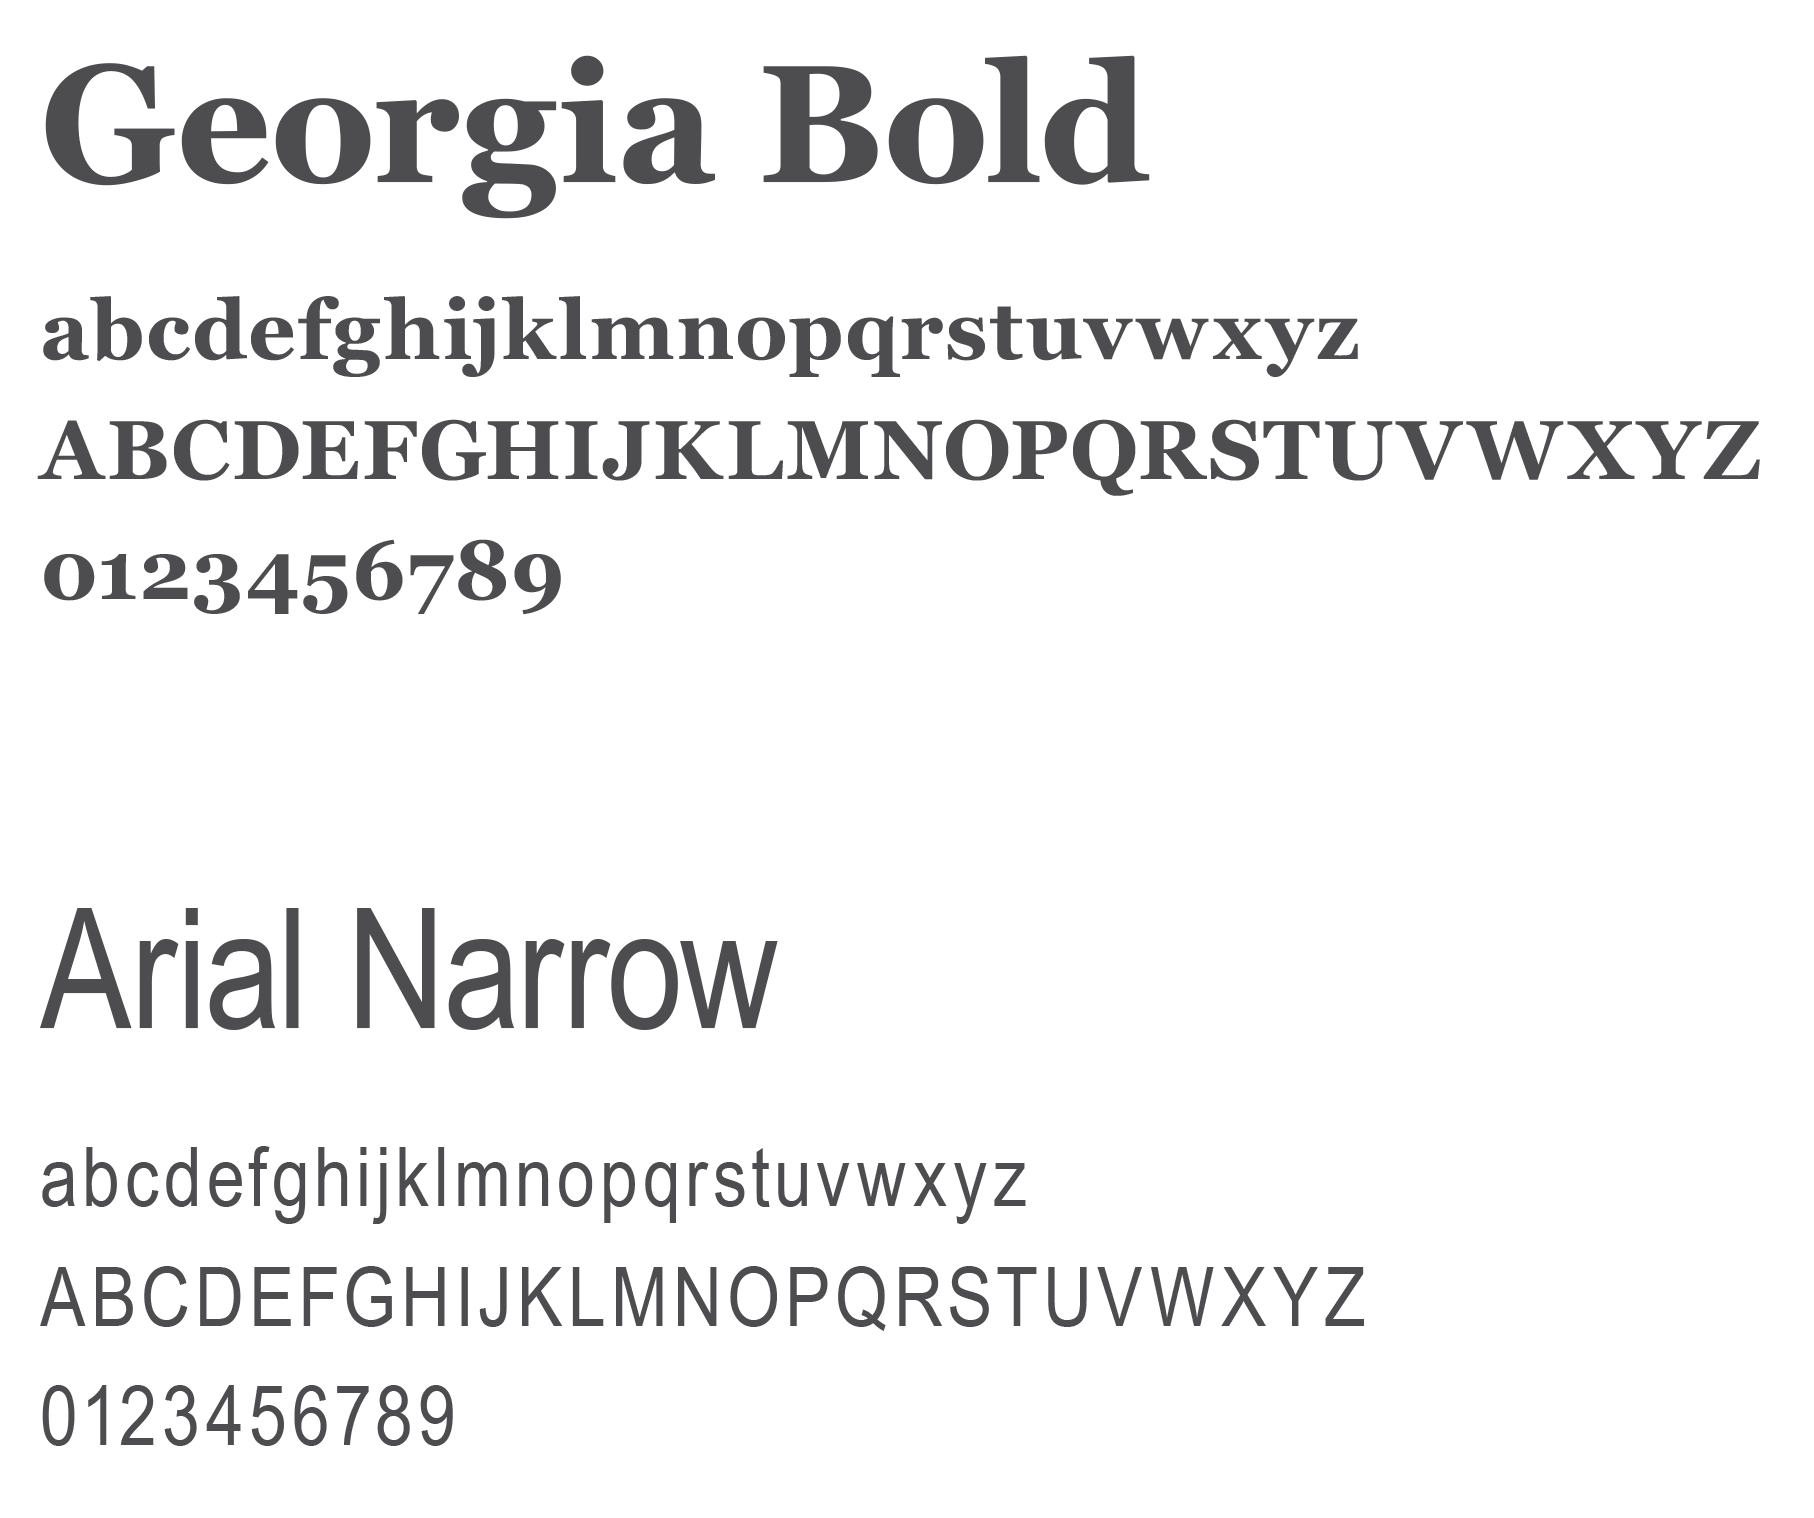 BCBSKS alternate fonts